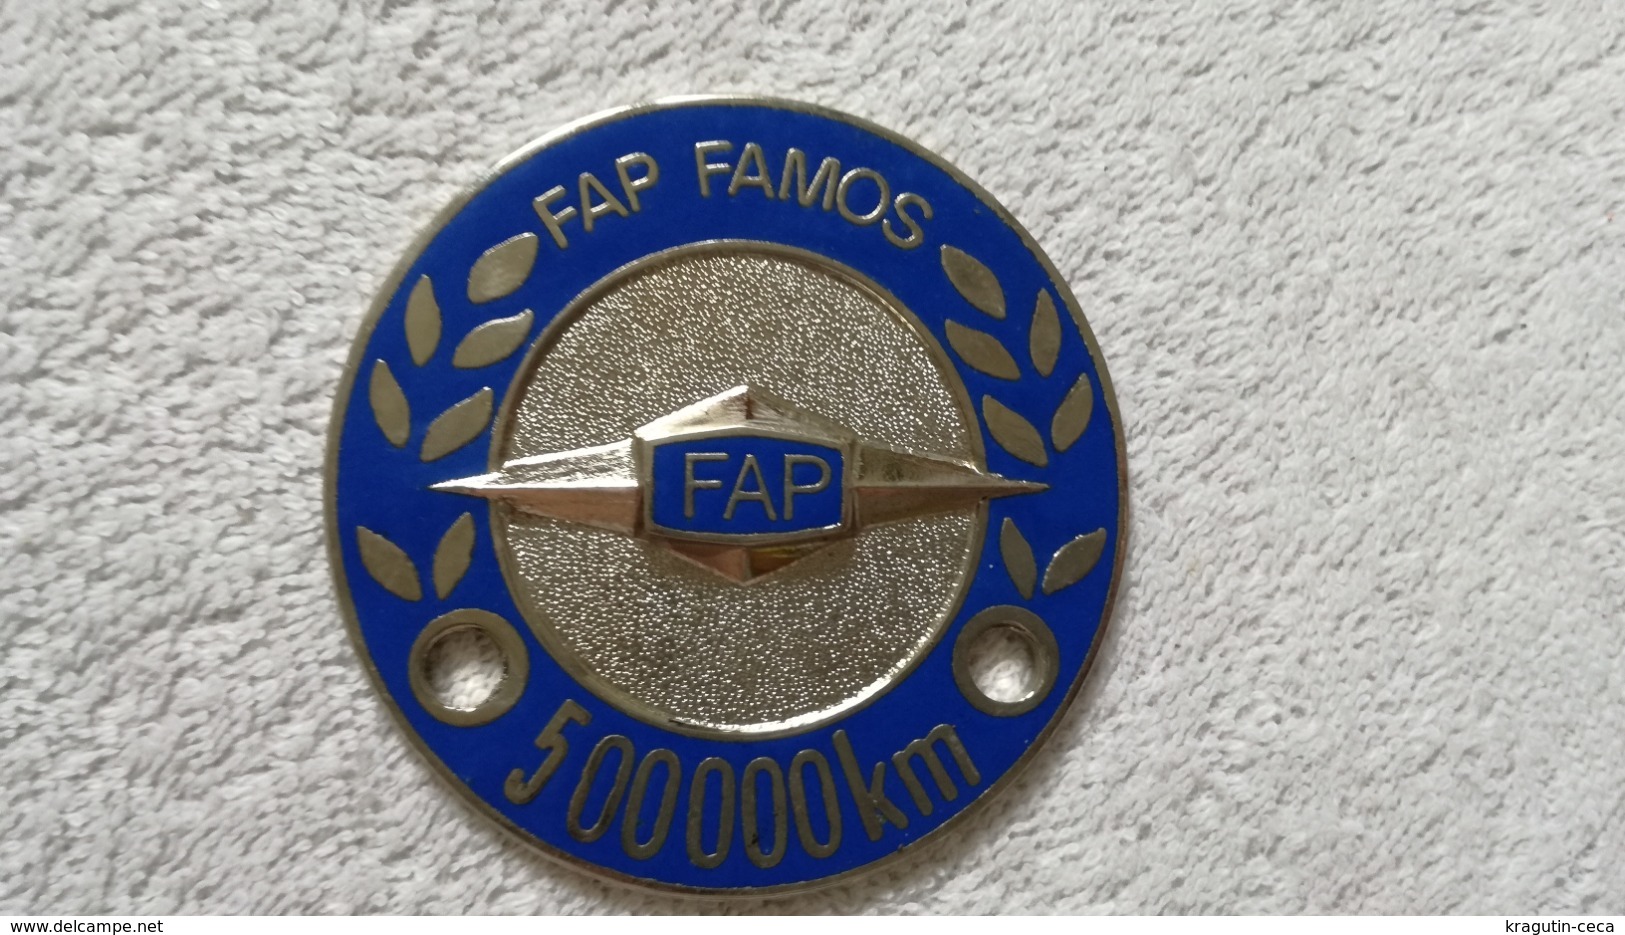 FAP FAMOS 500 000 km mileage Yugoslavia truck cooler name tag plate emblem badge sign logo insignia Serbia production